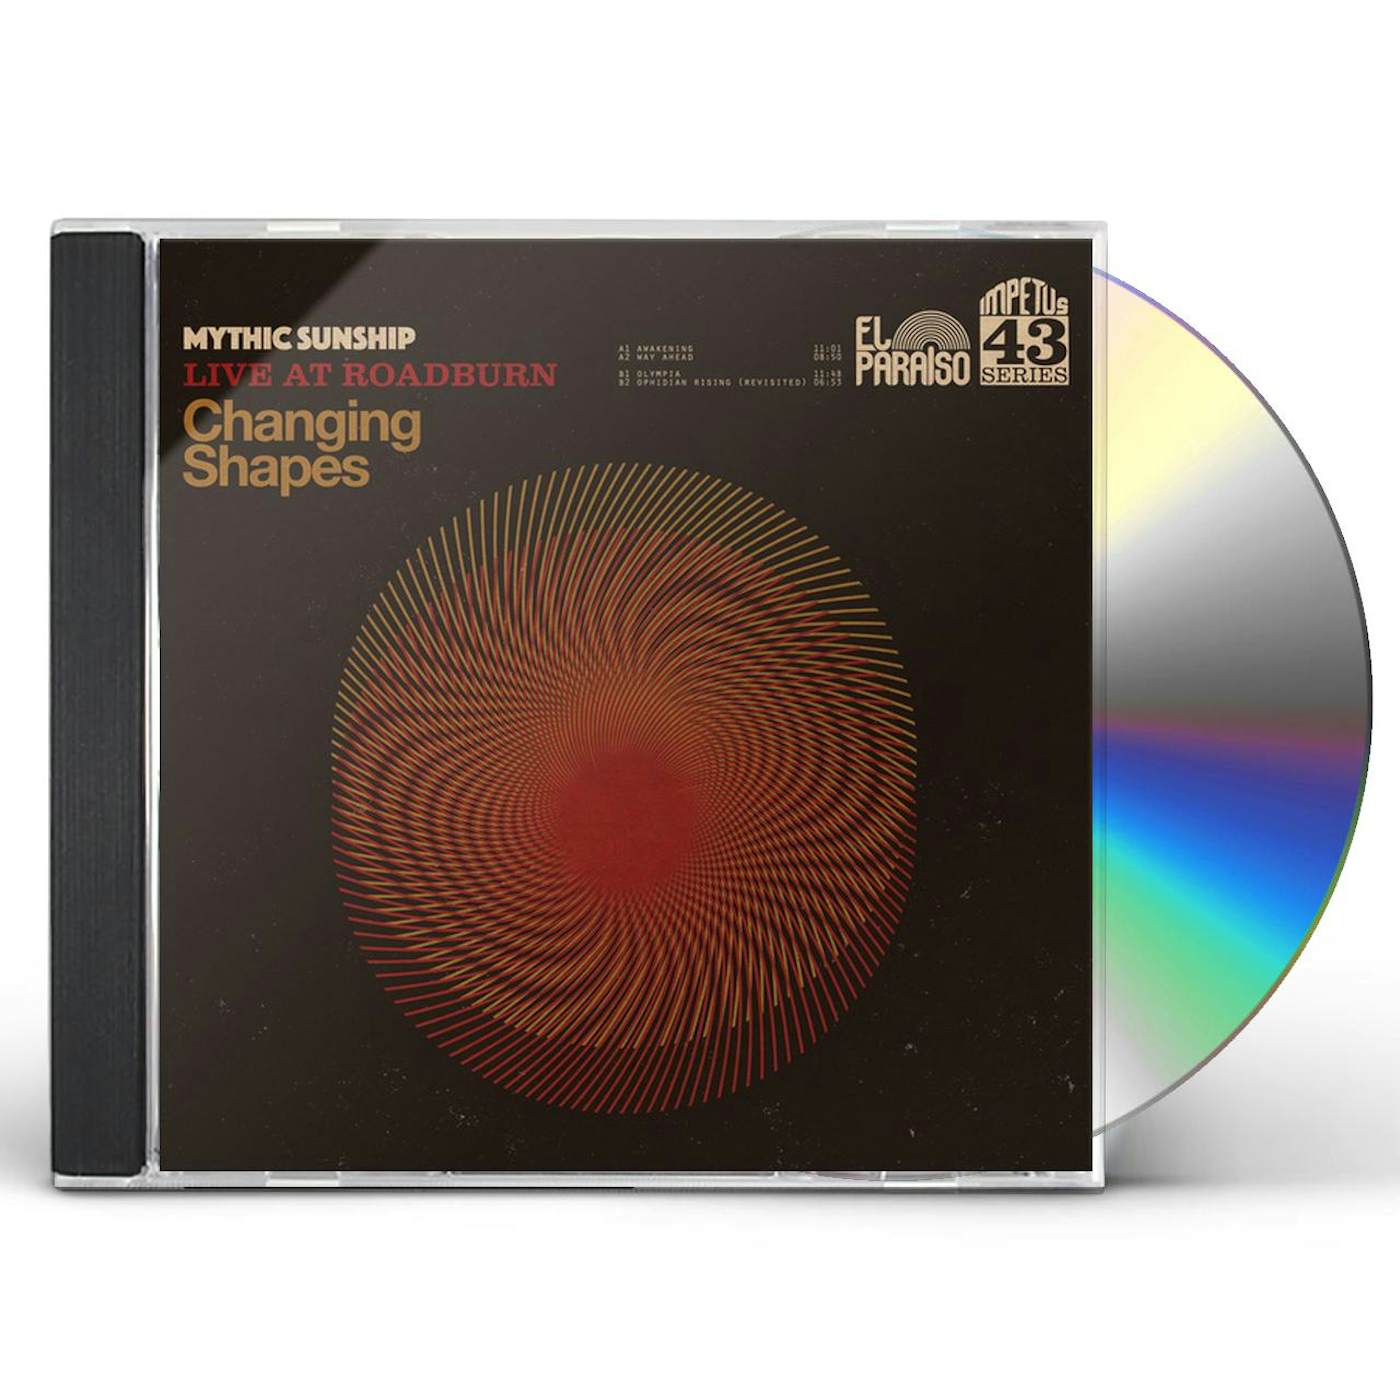 Mythic Sunship Changing shapes CD